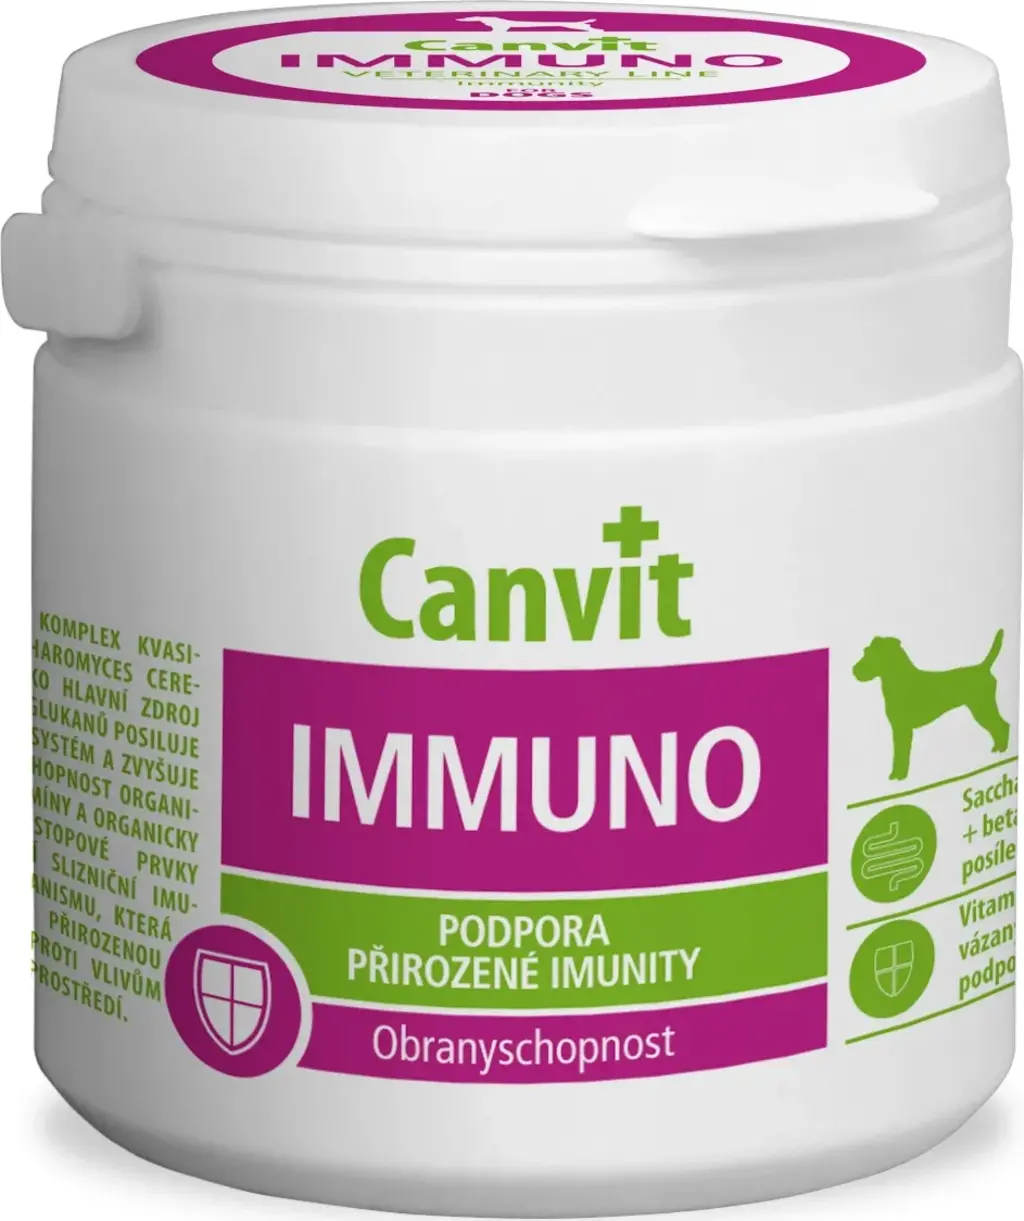 Canvit Dog Immuno 100 g